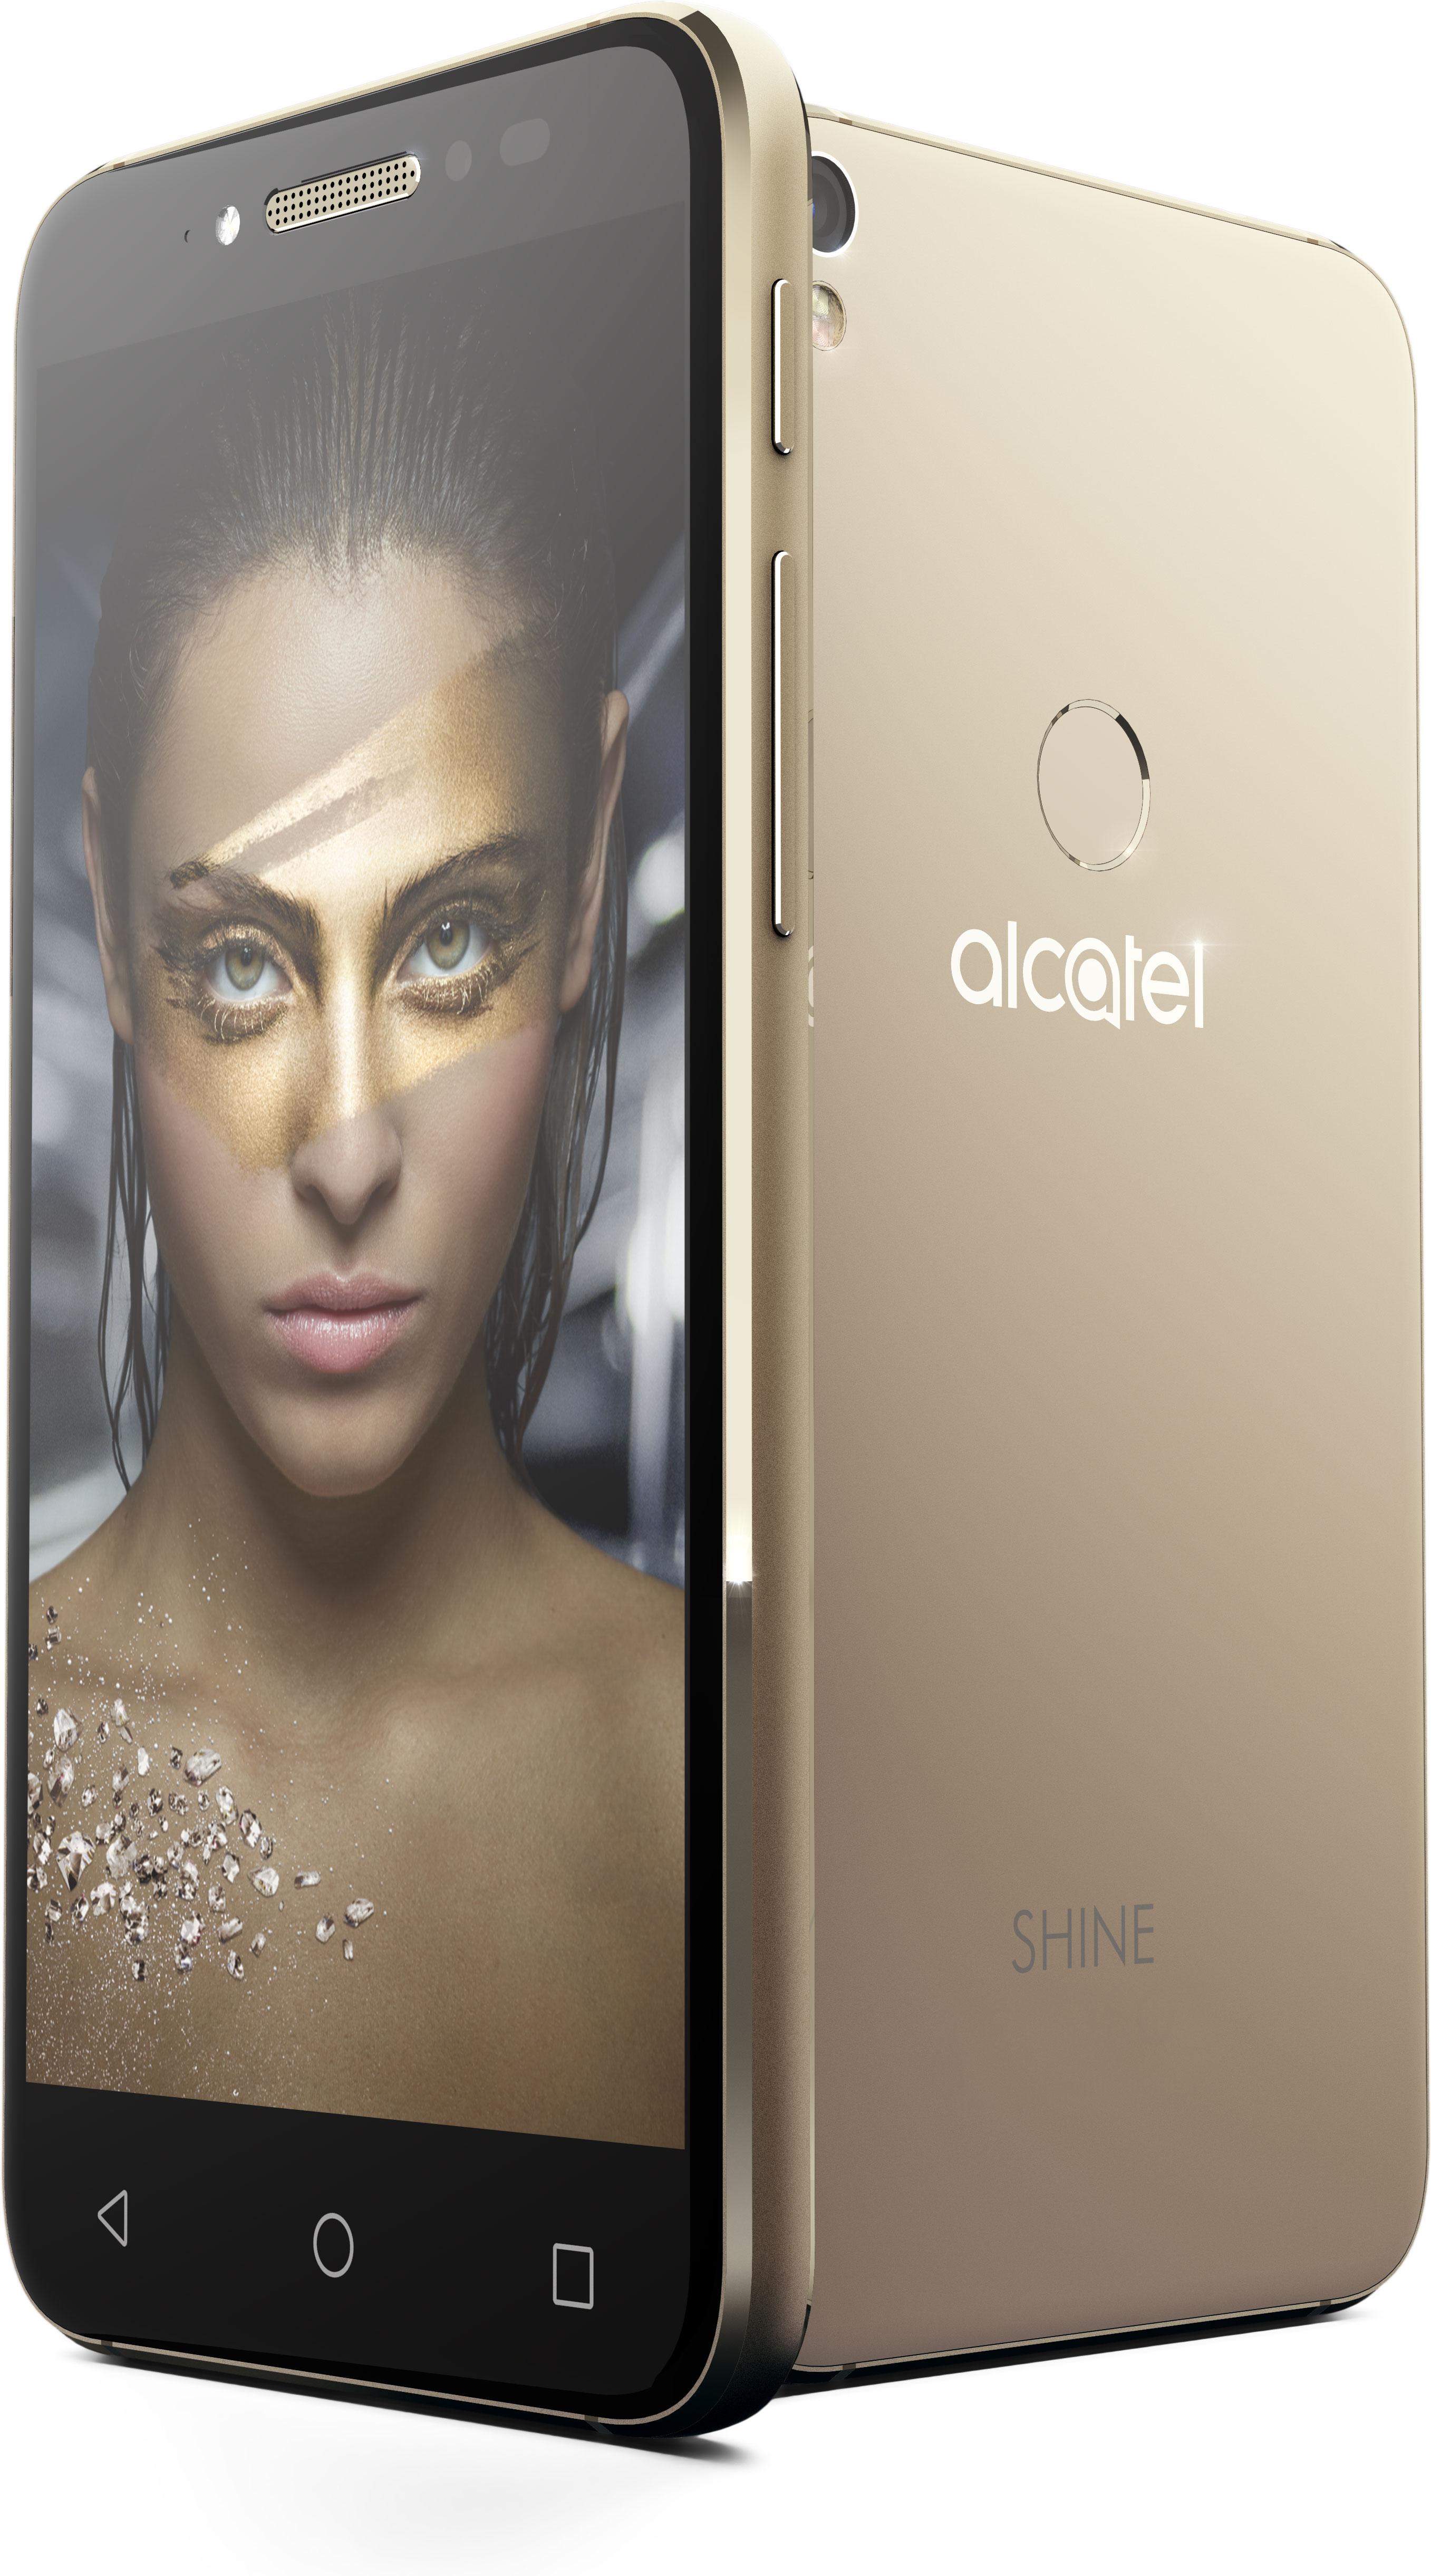 Alcatel Shine dorado con chica en pantalla